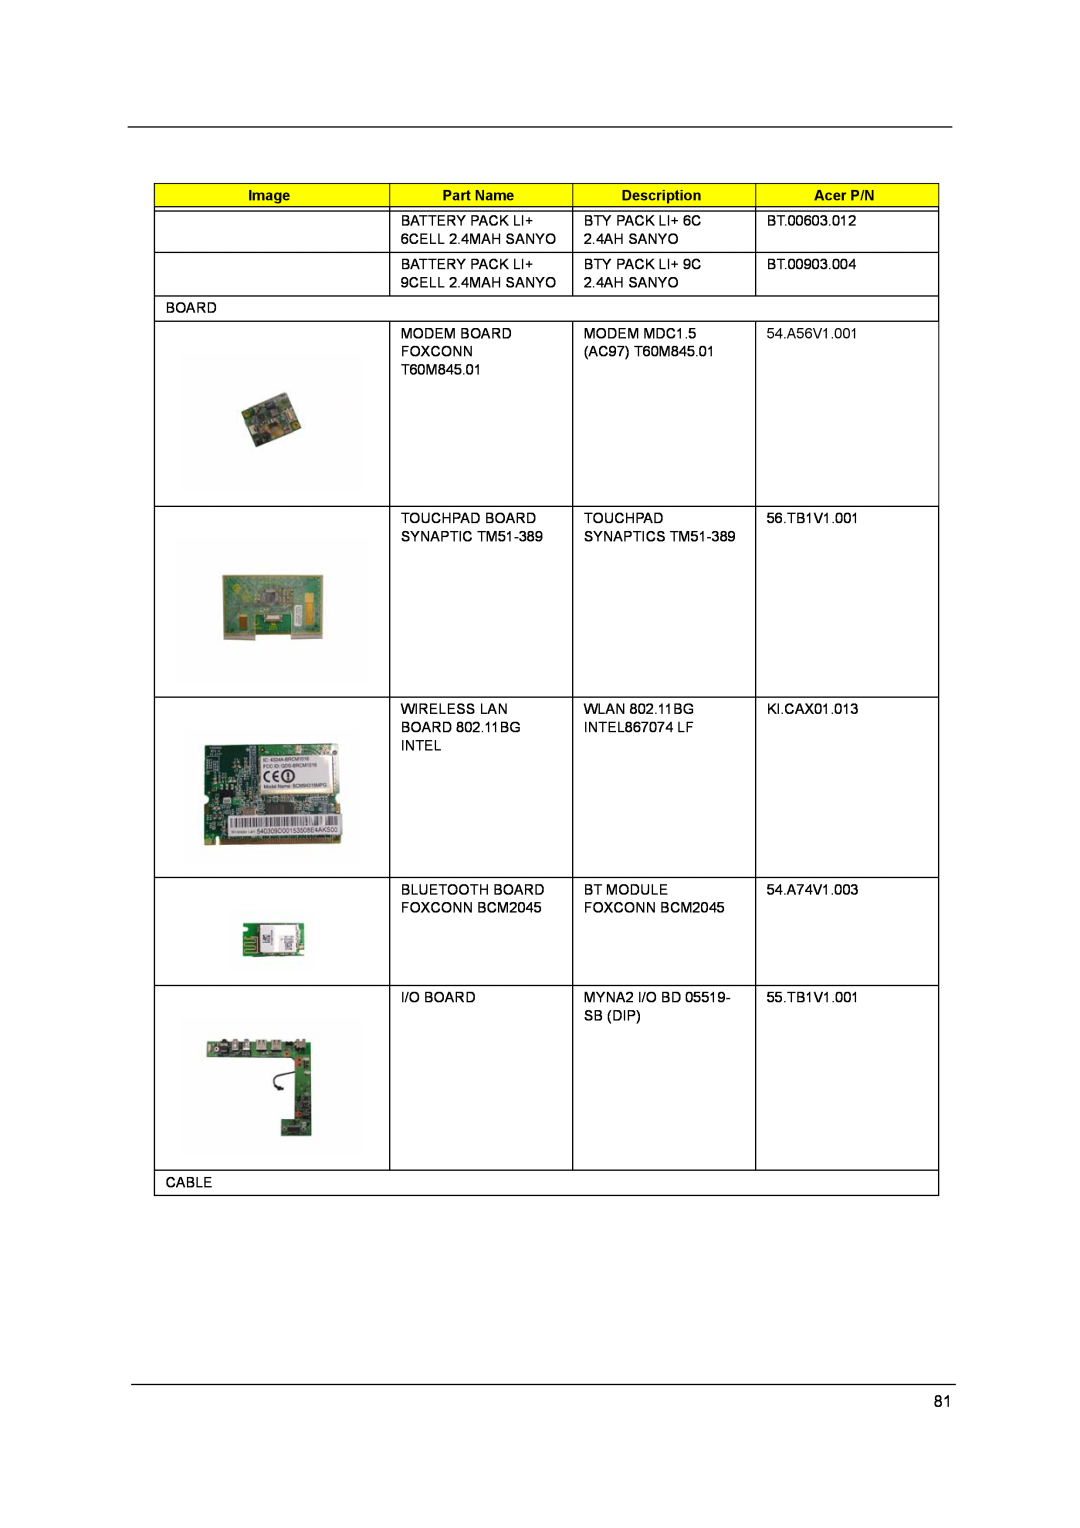 Acer LISHIN SLS0335A19A54LF, QD14TL0102, PLUTO MK6025GAS, MK4025GAS, PLUTO MK8025GAS Image, Part Name, Description, Acer P/N 